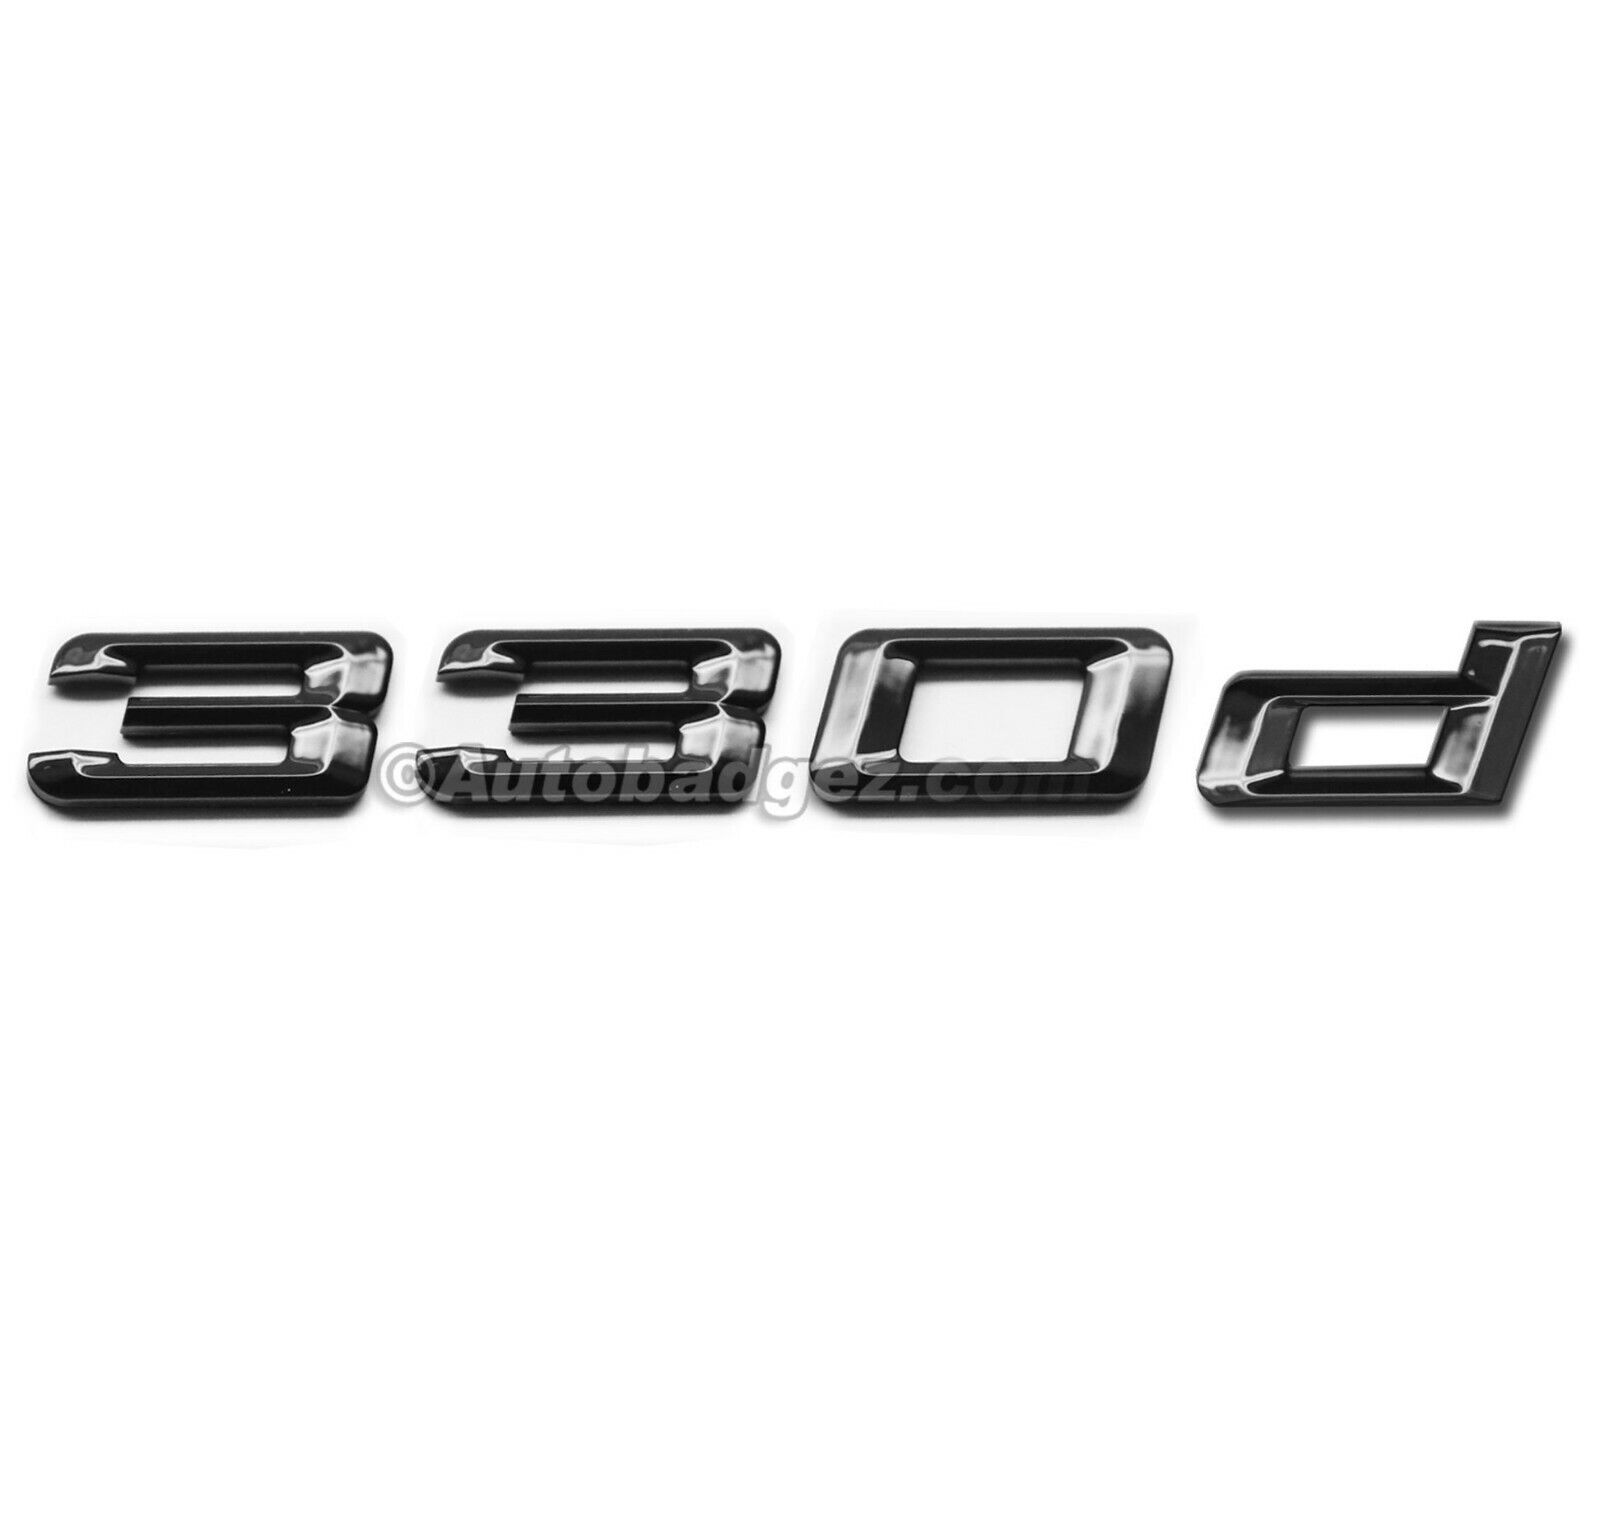 330d Rear Trunk Deck 3D Numbers Badge Emblem OEM Quality Gloss Black 330D USA